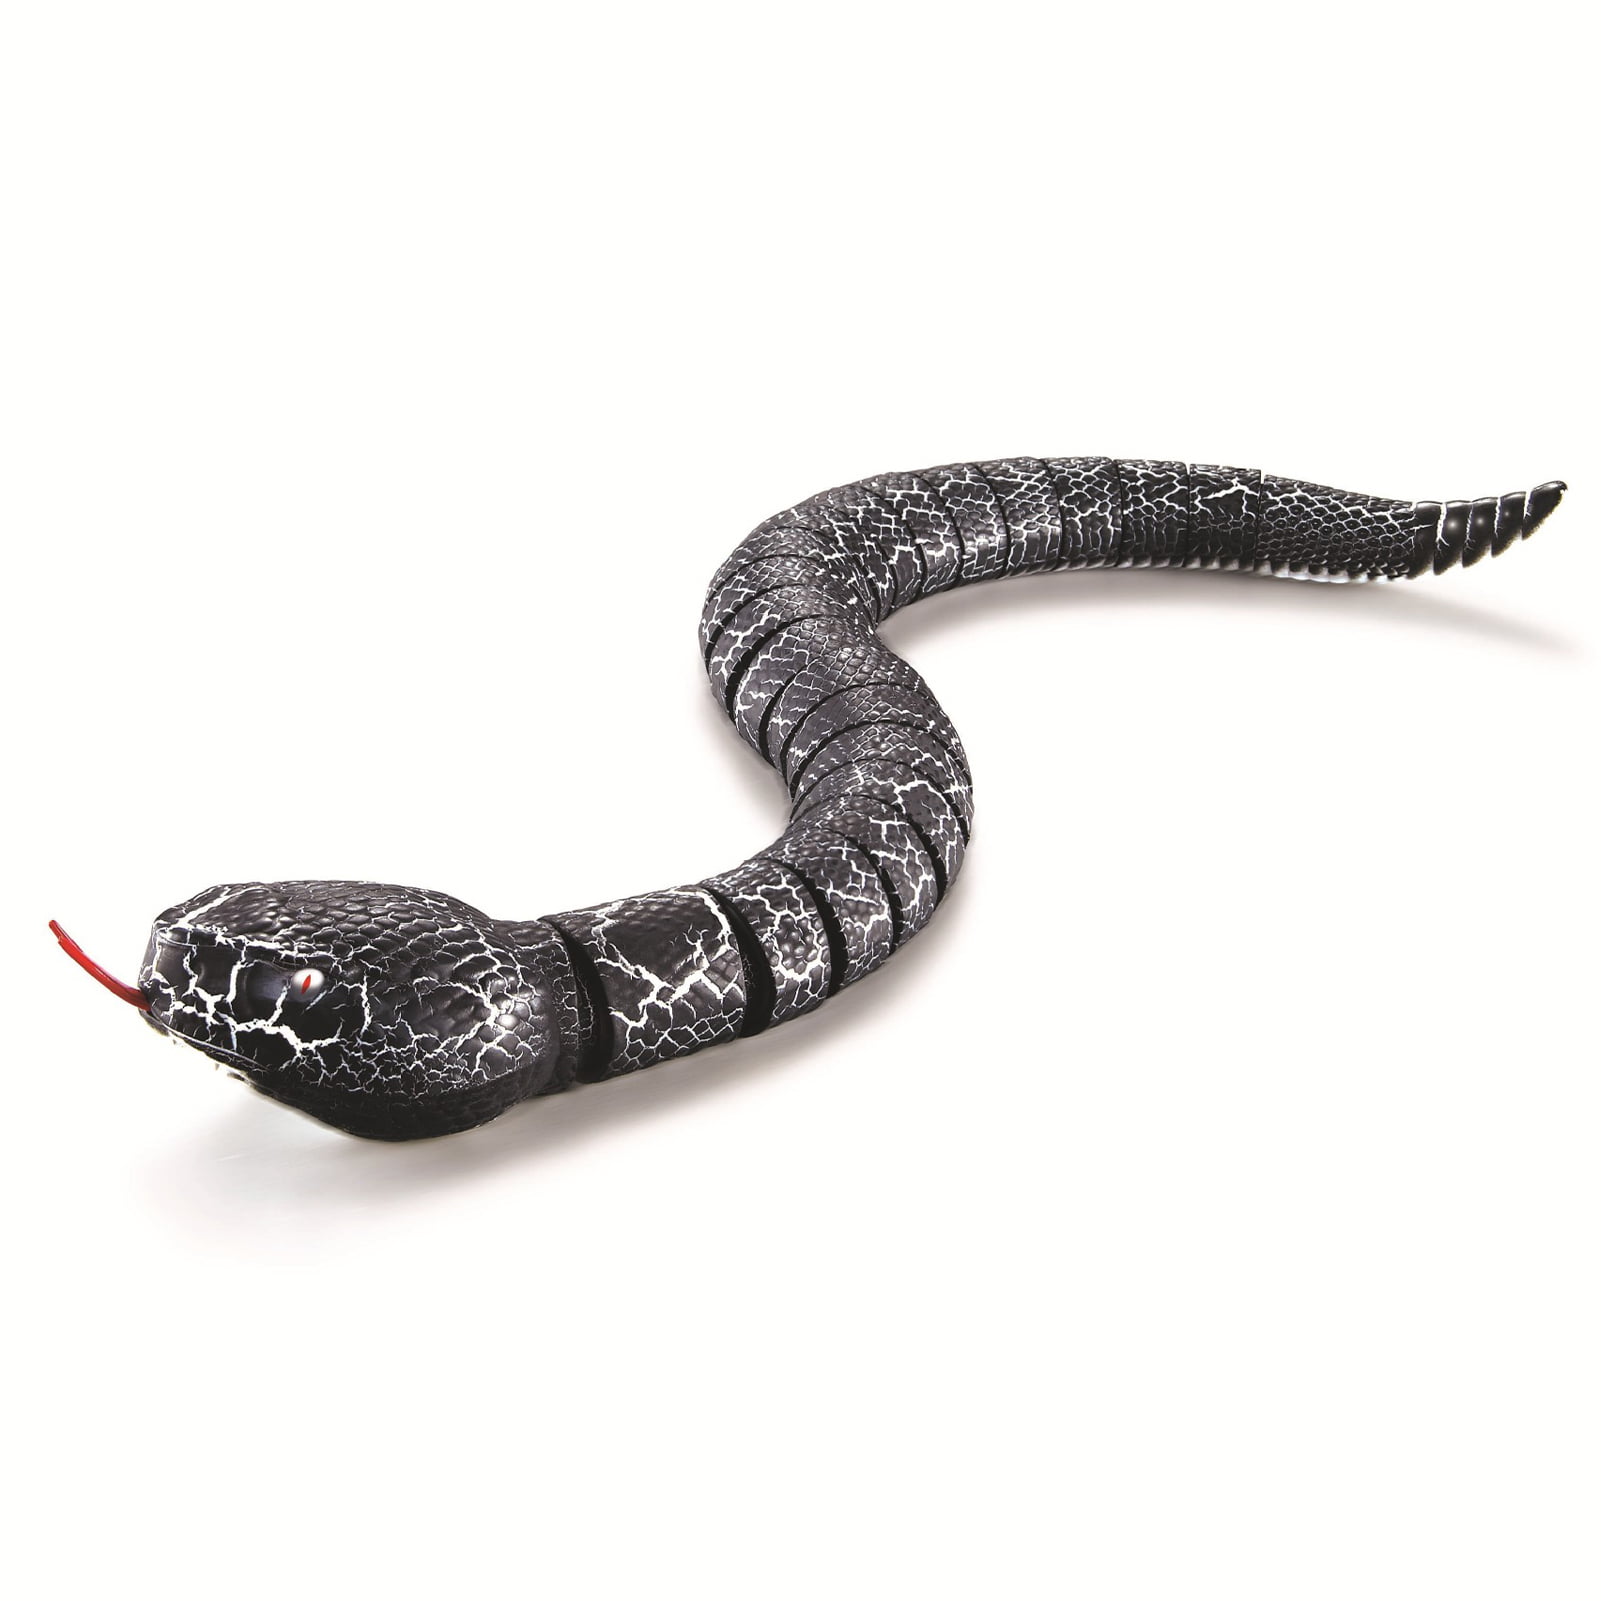 RC Serpent Toy Infrared Rechargeable Rattlesnake Jouet Avec Rétractable langue R6K7 